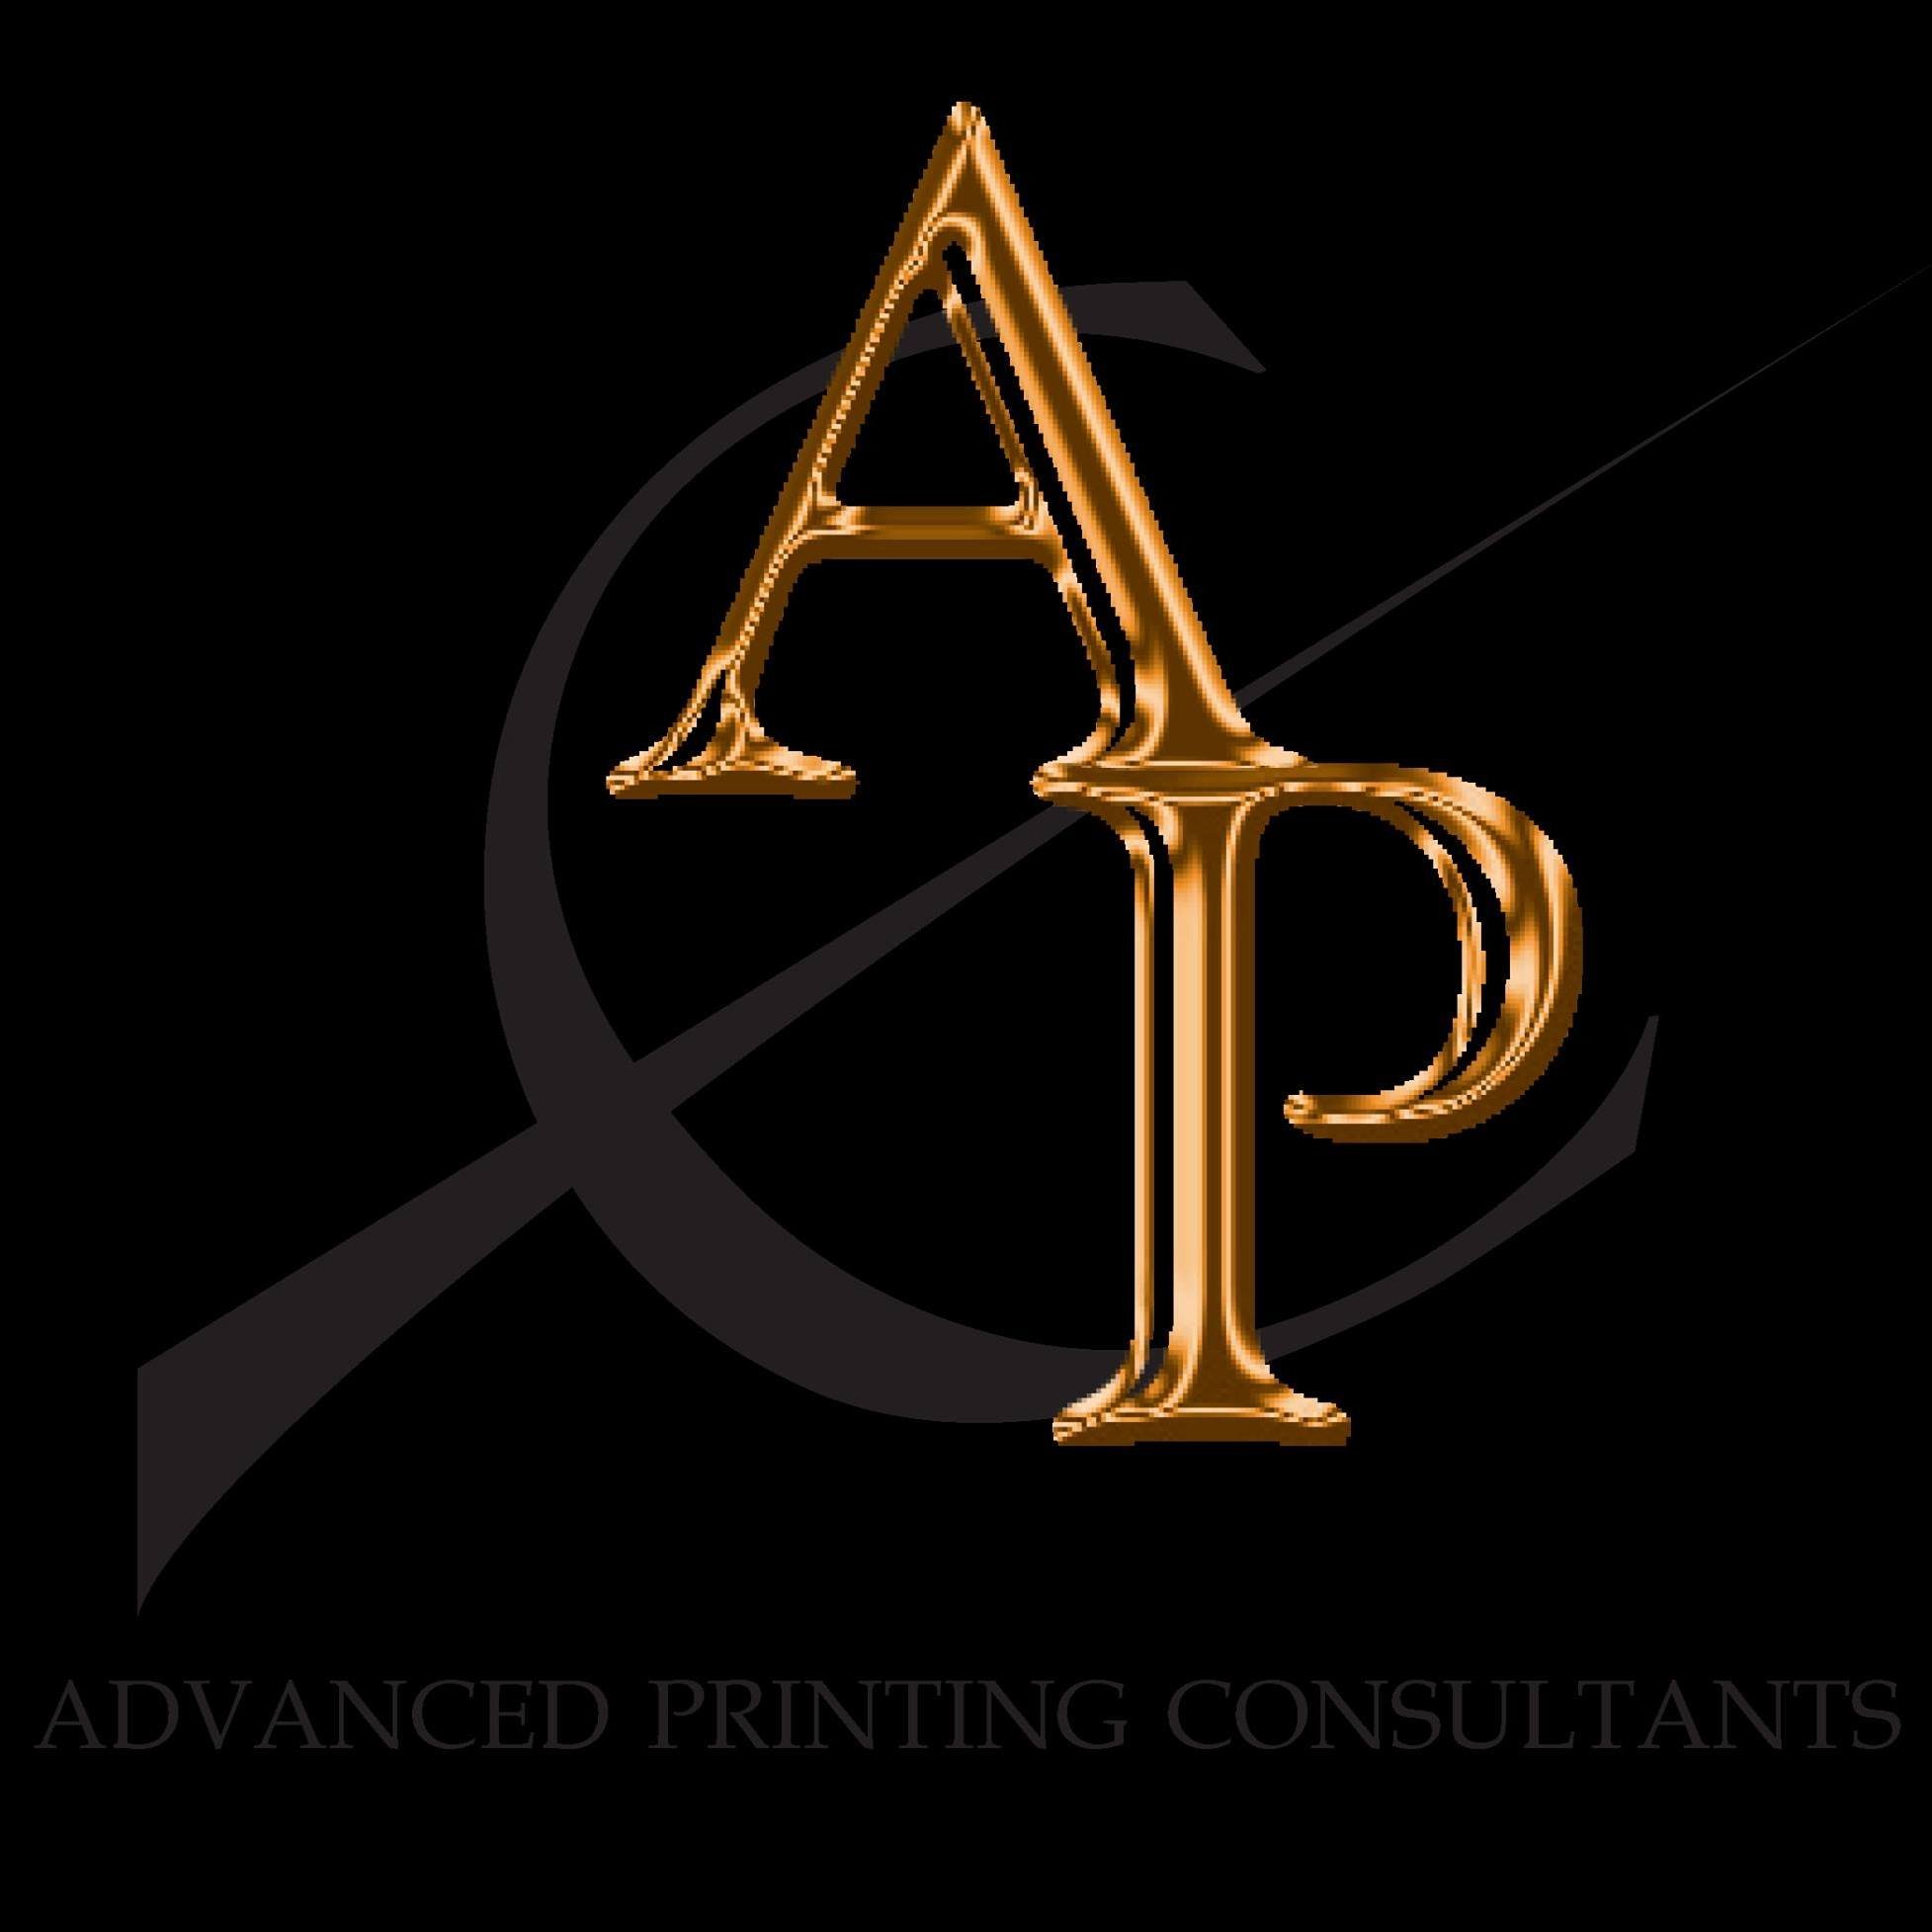 advanced printing consultants logo.jpg